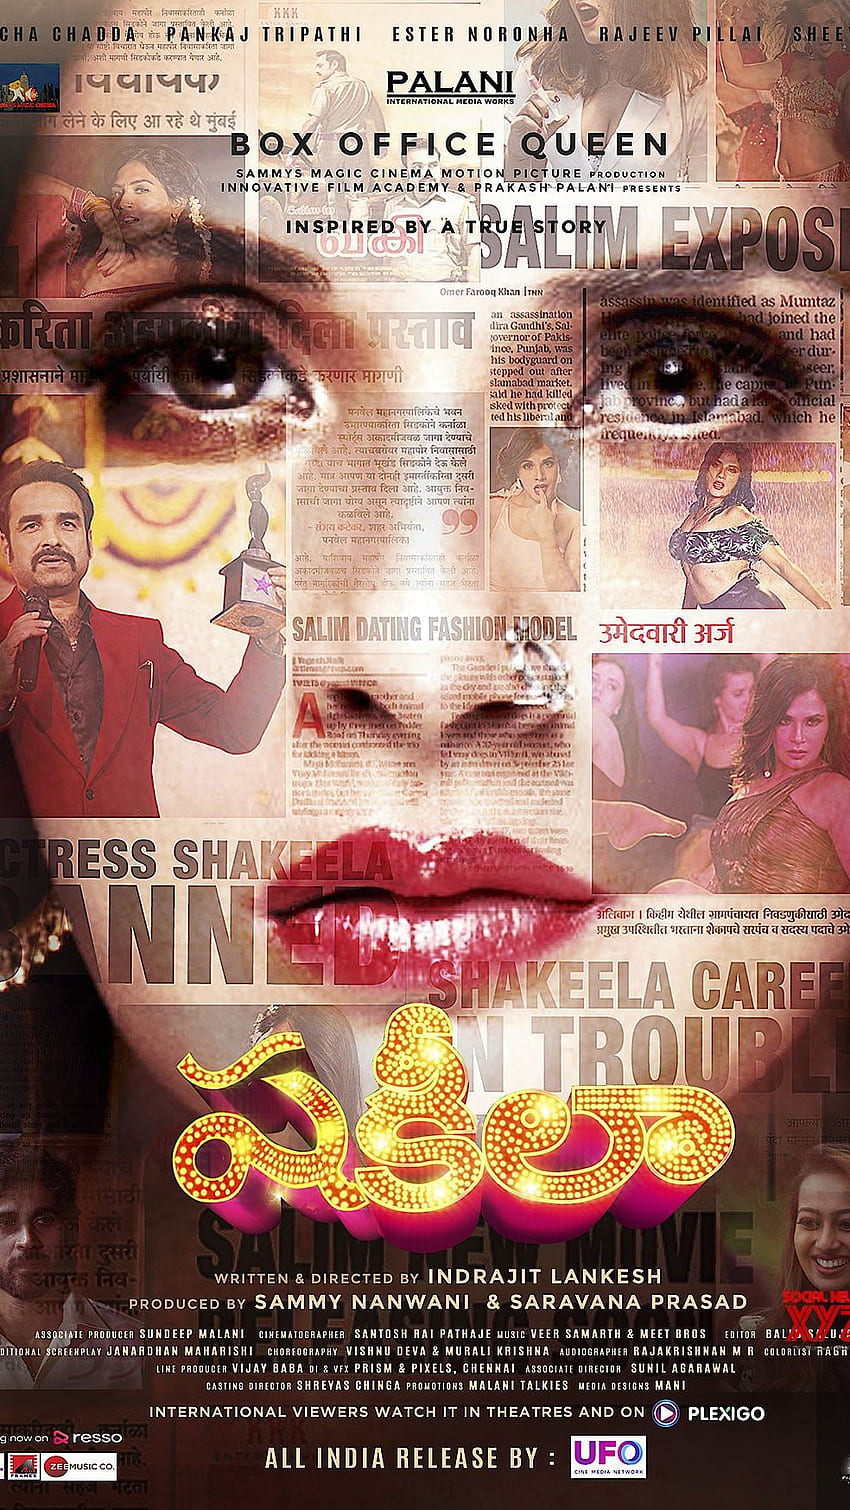 Richa Chadda, cinebiografia de shakeela, filme de Bollywood Papel de parede de celular HD